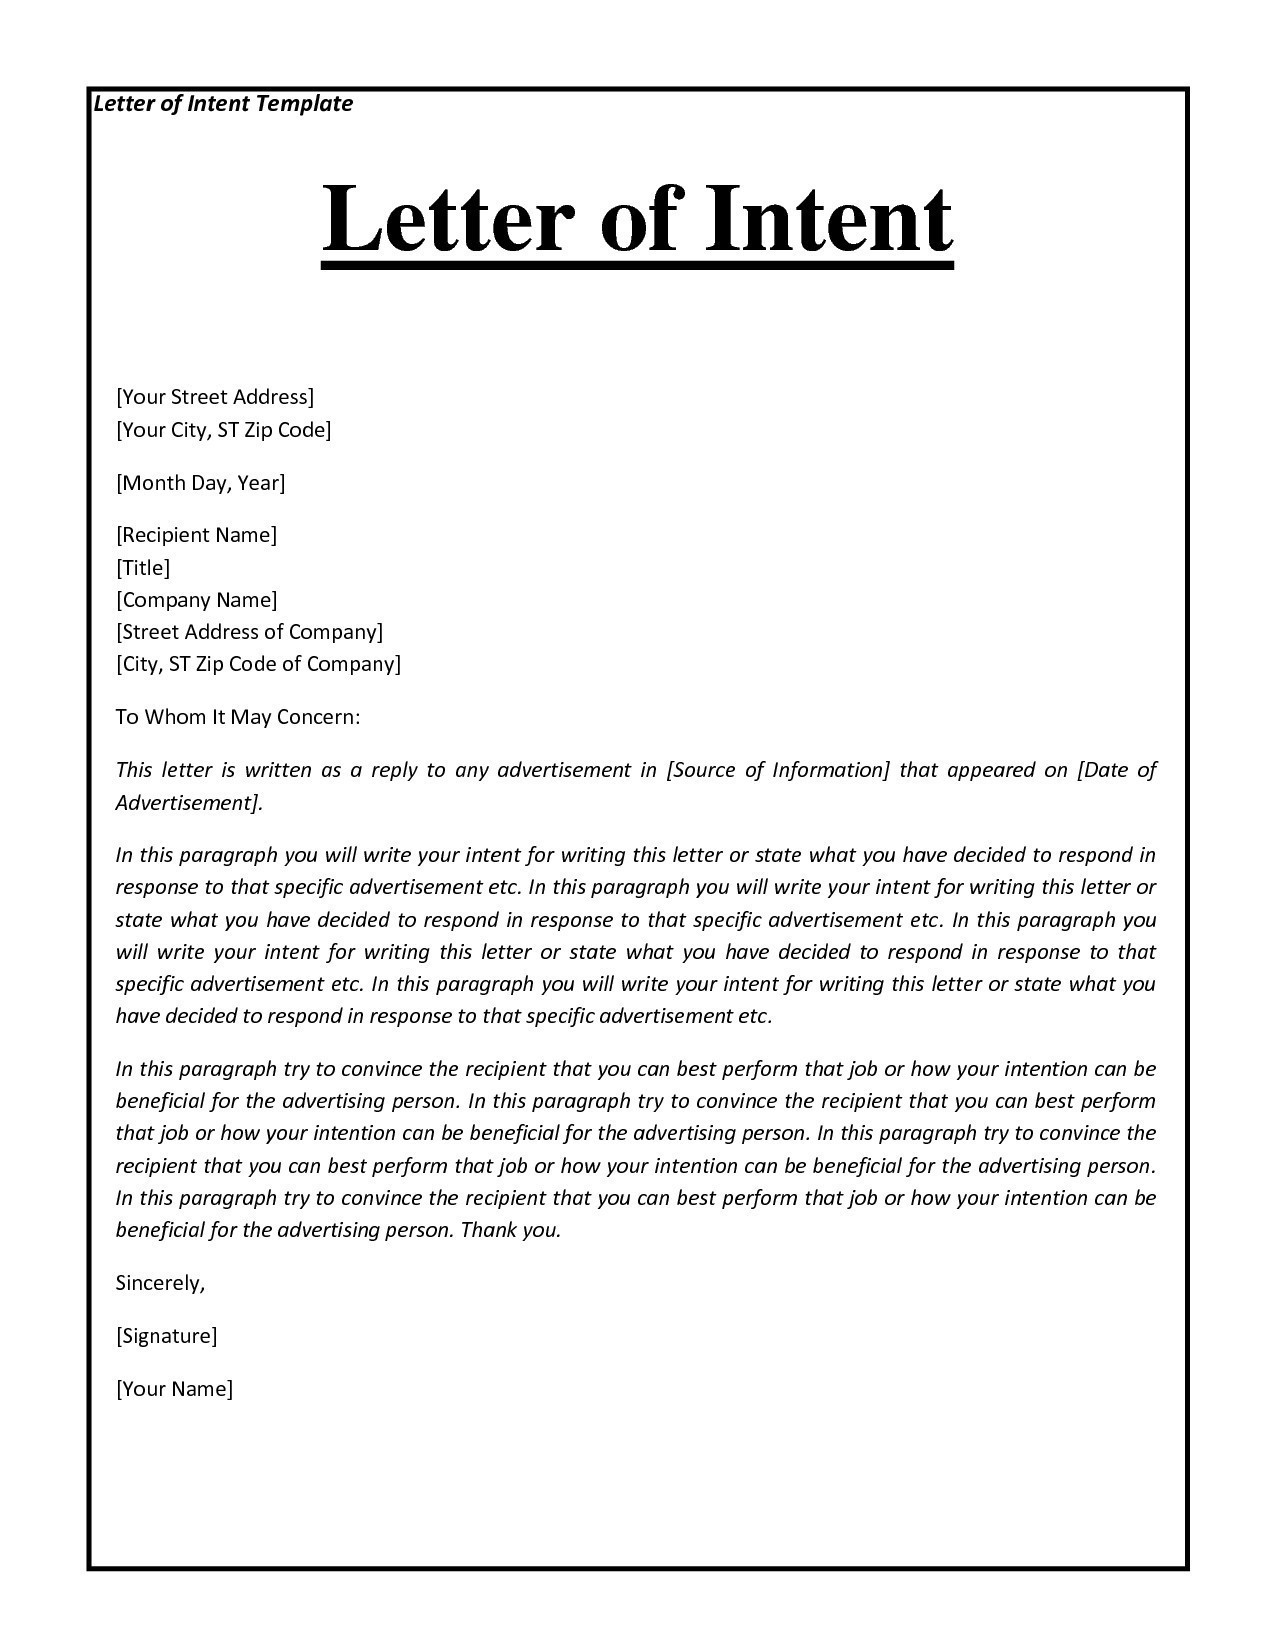 Letter Of Intent for Promotion Template - Letter Intent Job Template Inspirationa Letter Intent Job Sample